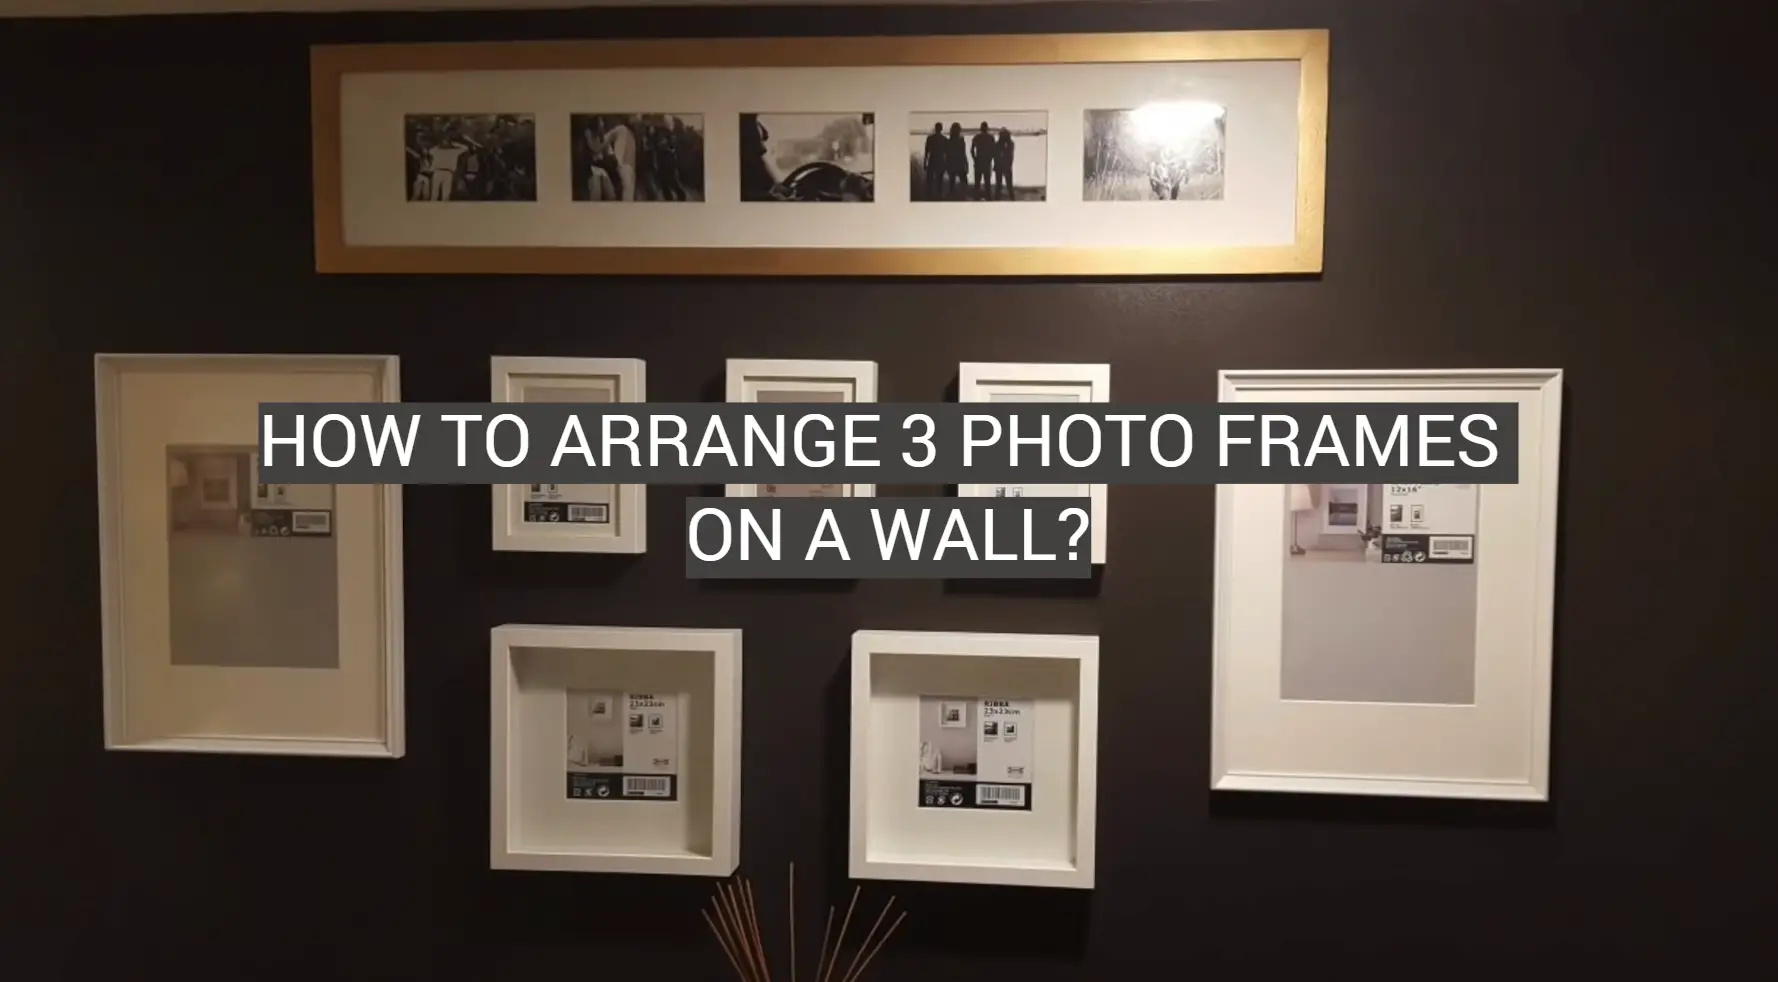 How to Arrange 3 Photo Frames on a Wall?